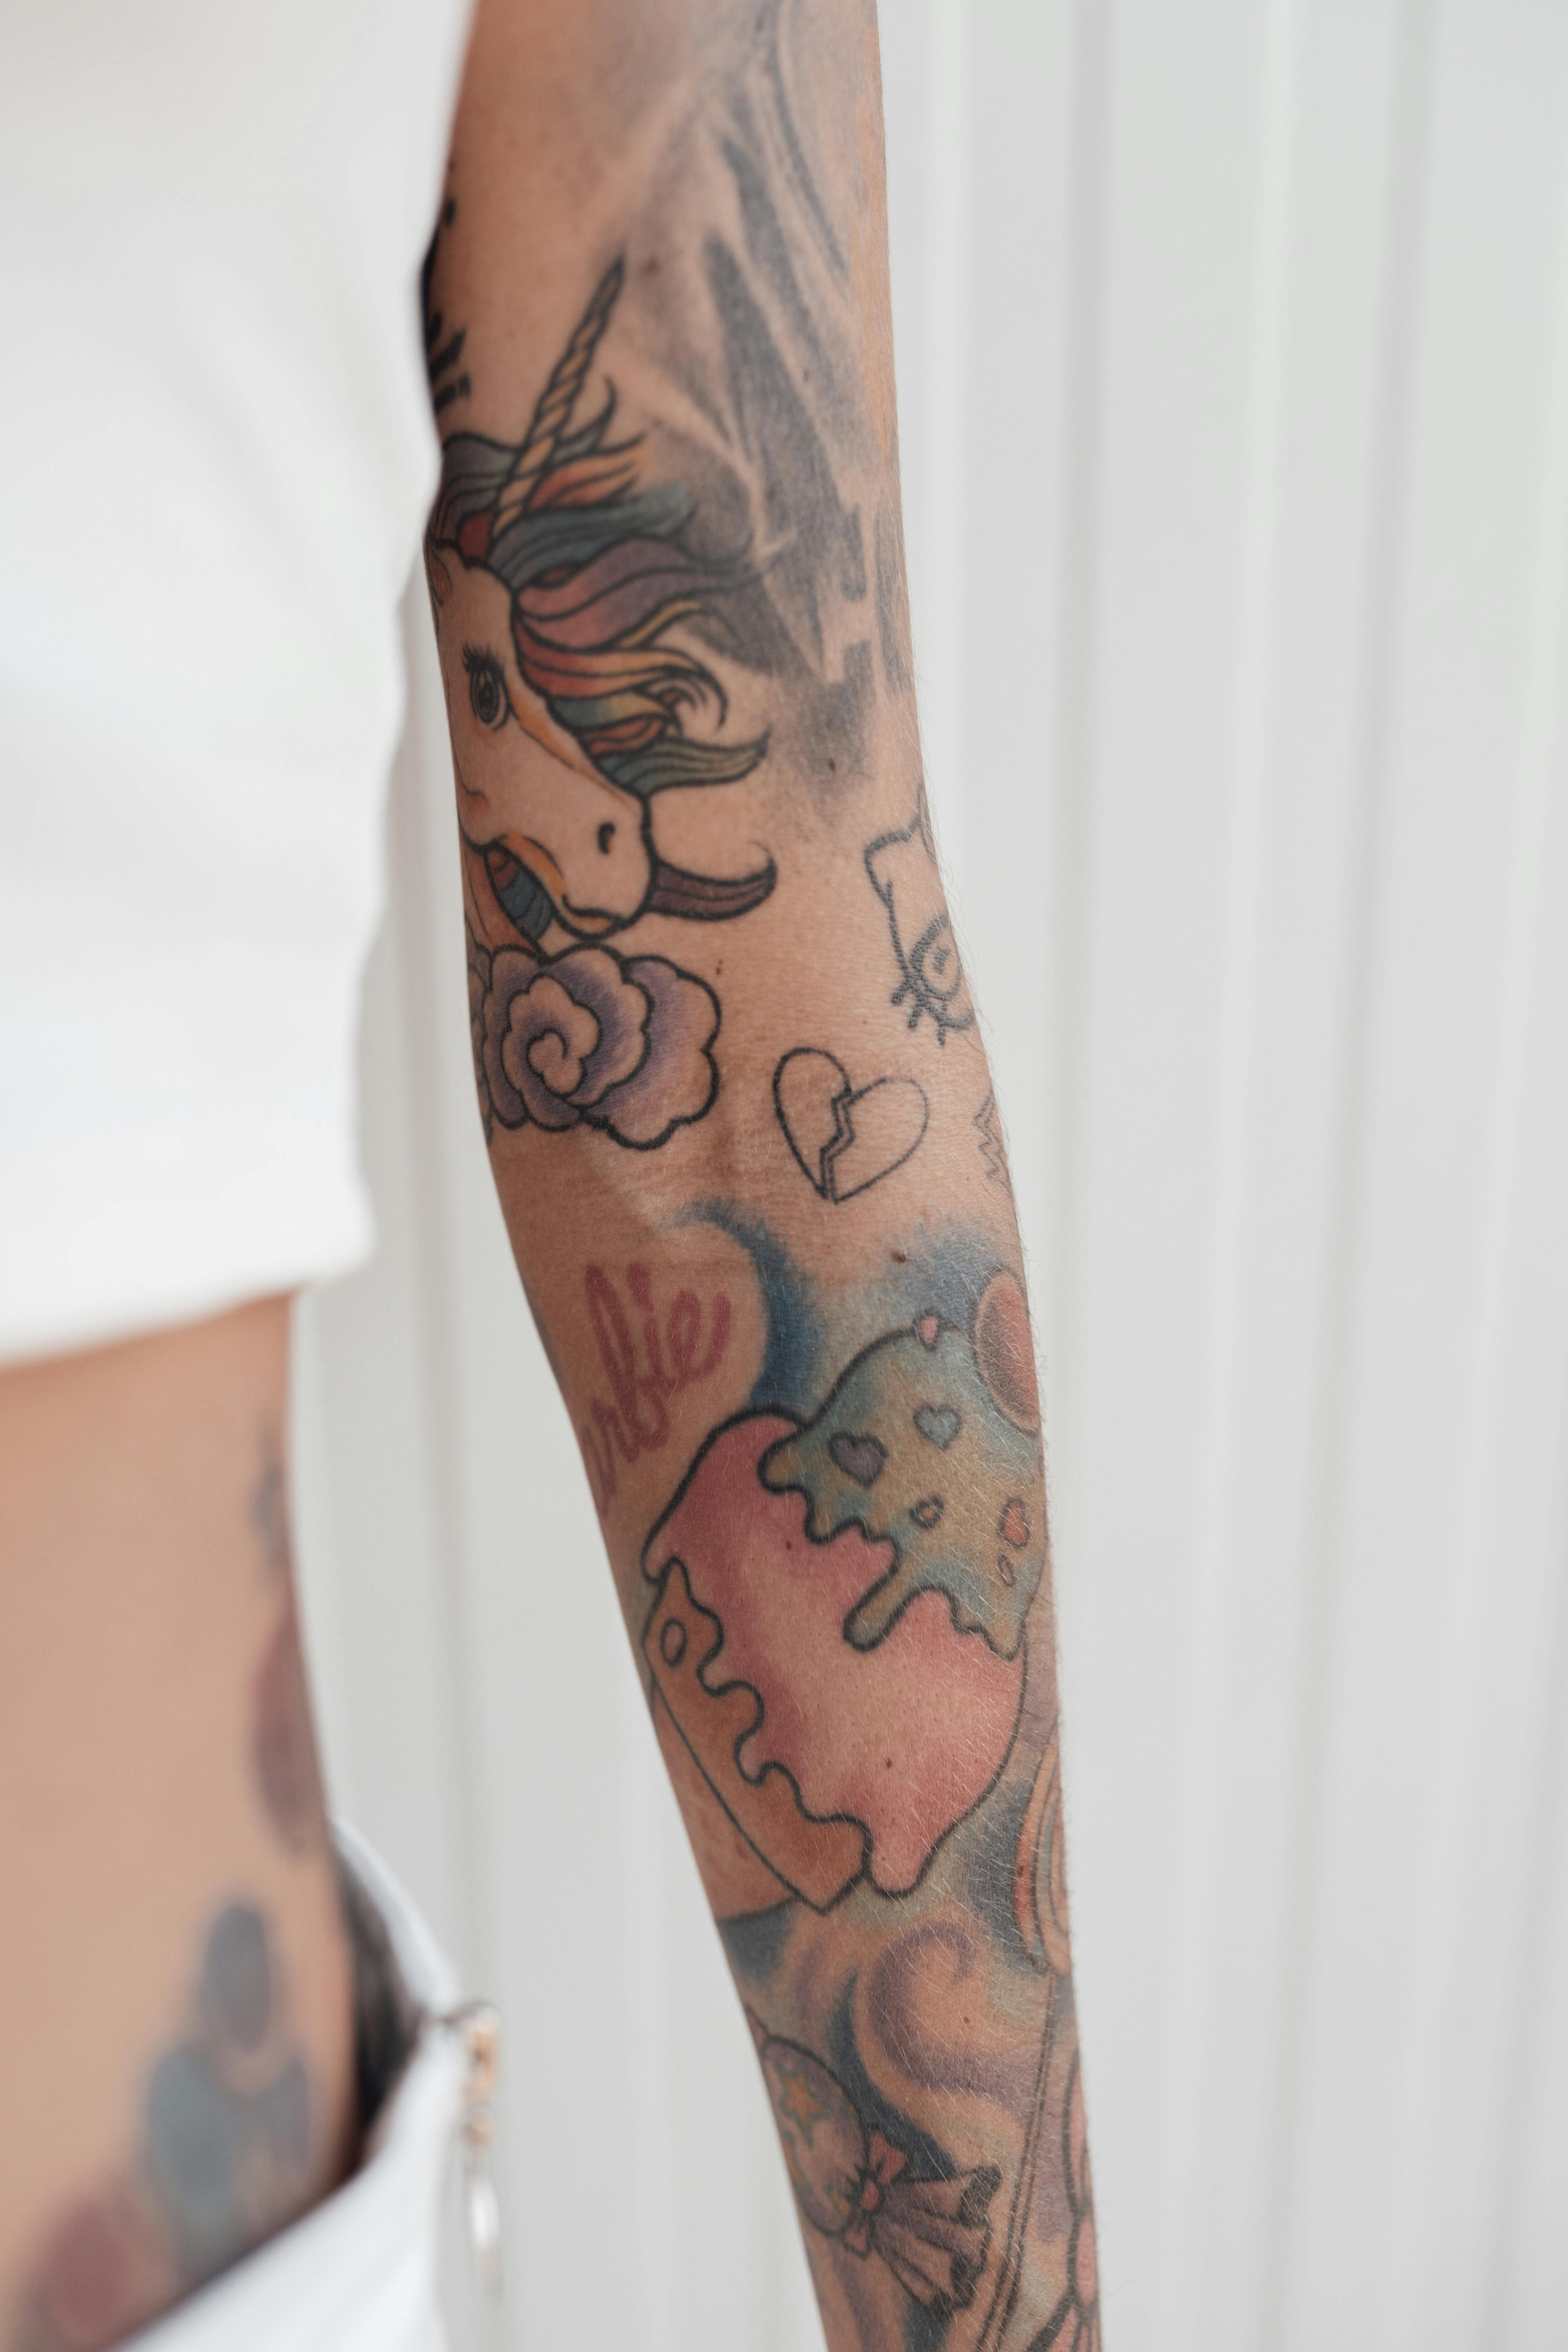 Patchwork sleeve in progress 👀 #patchwork #sleeve #tattoo #tattoos  #patchworksleeve #linetattoo | By The Tattooed LadyFacebook